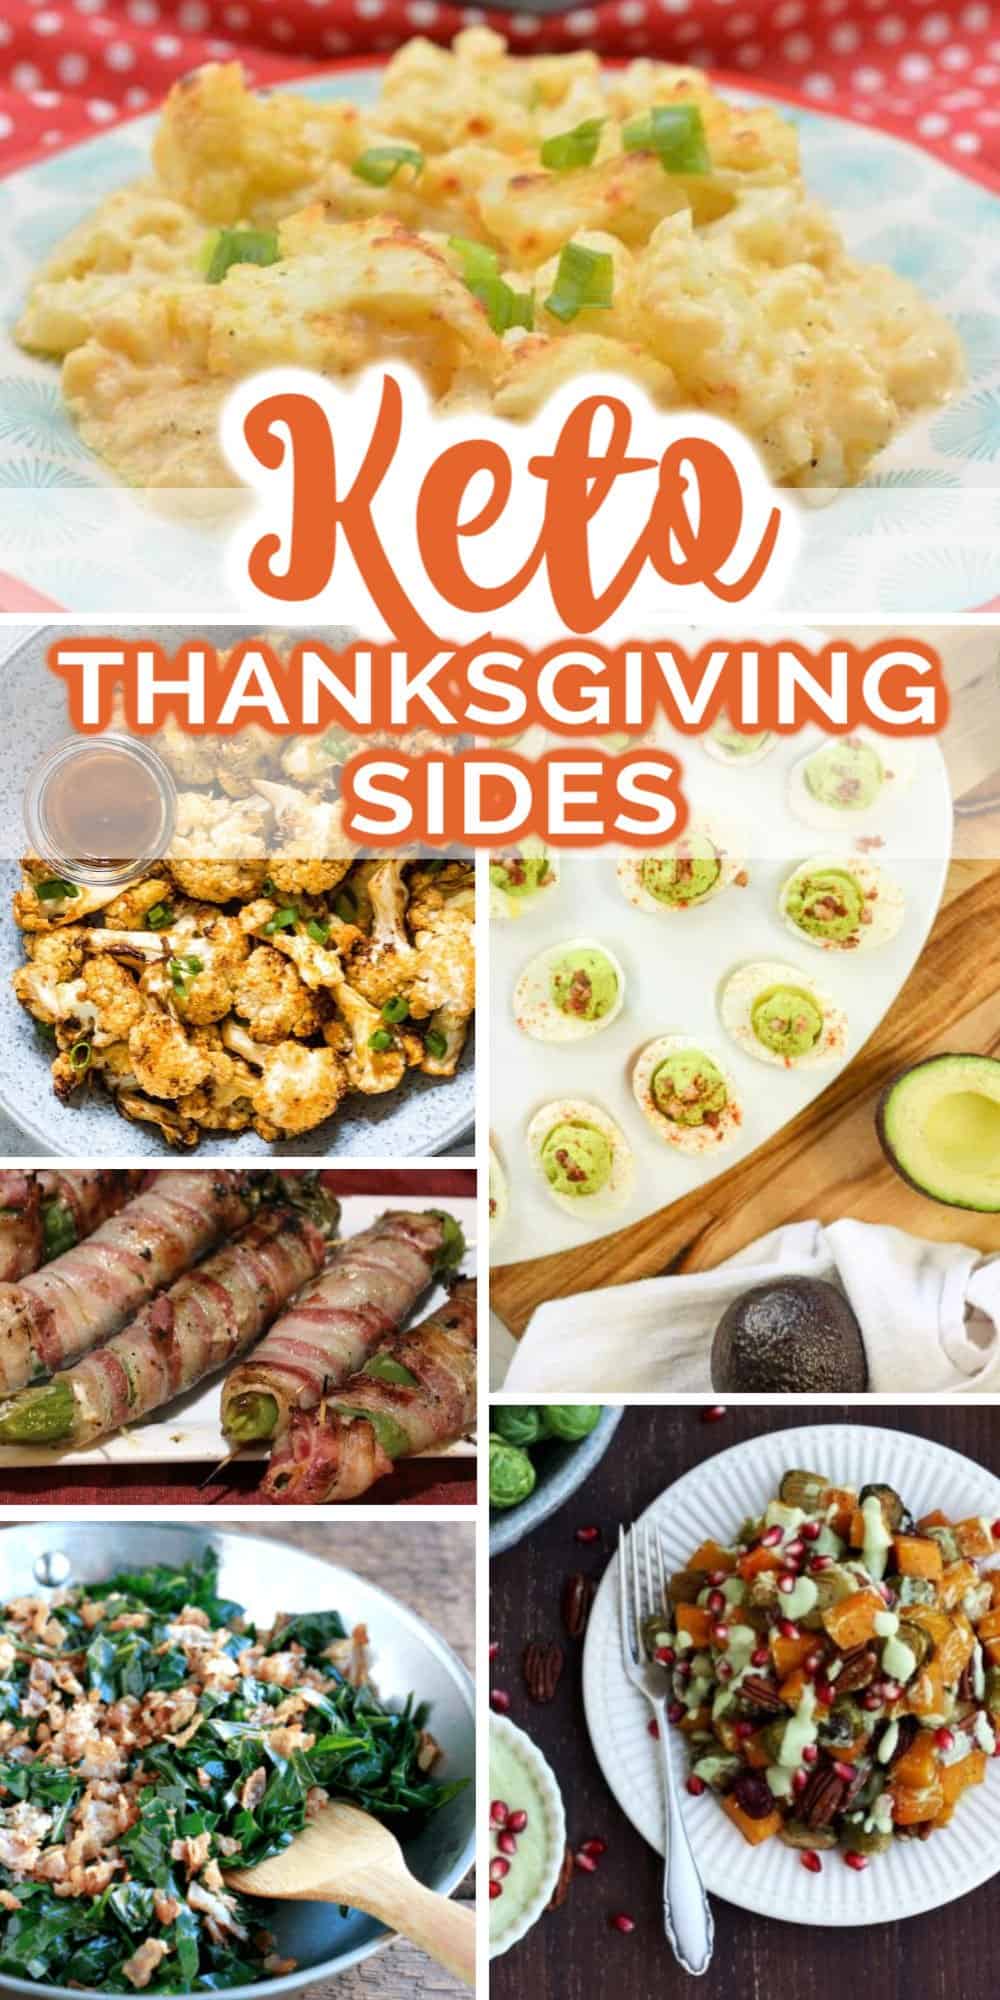 Keto thanksgiving foods on plates